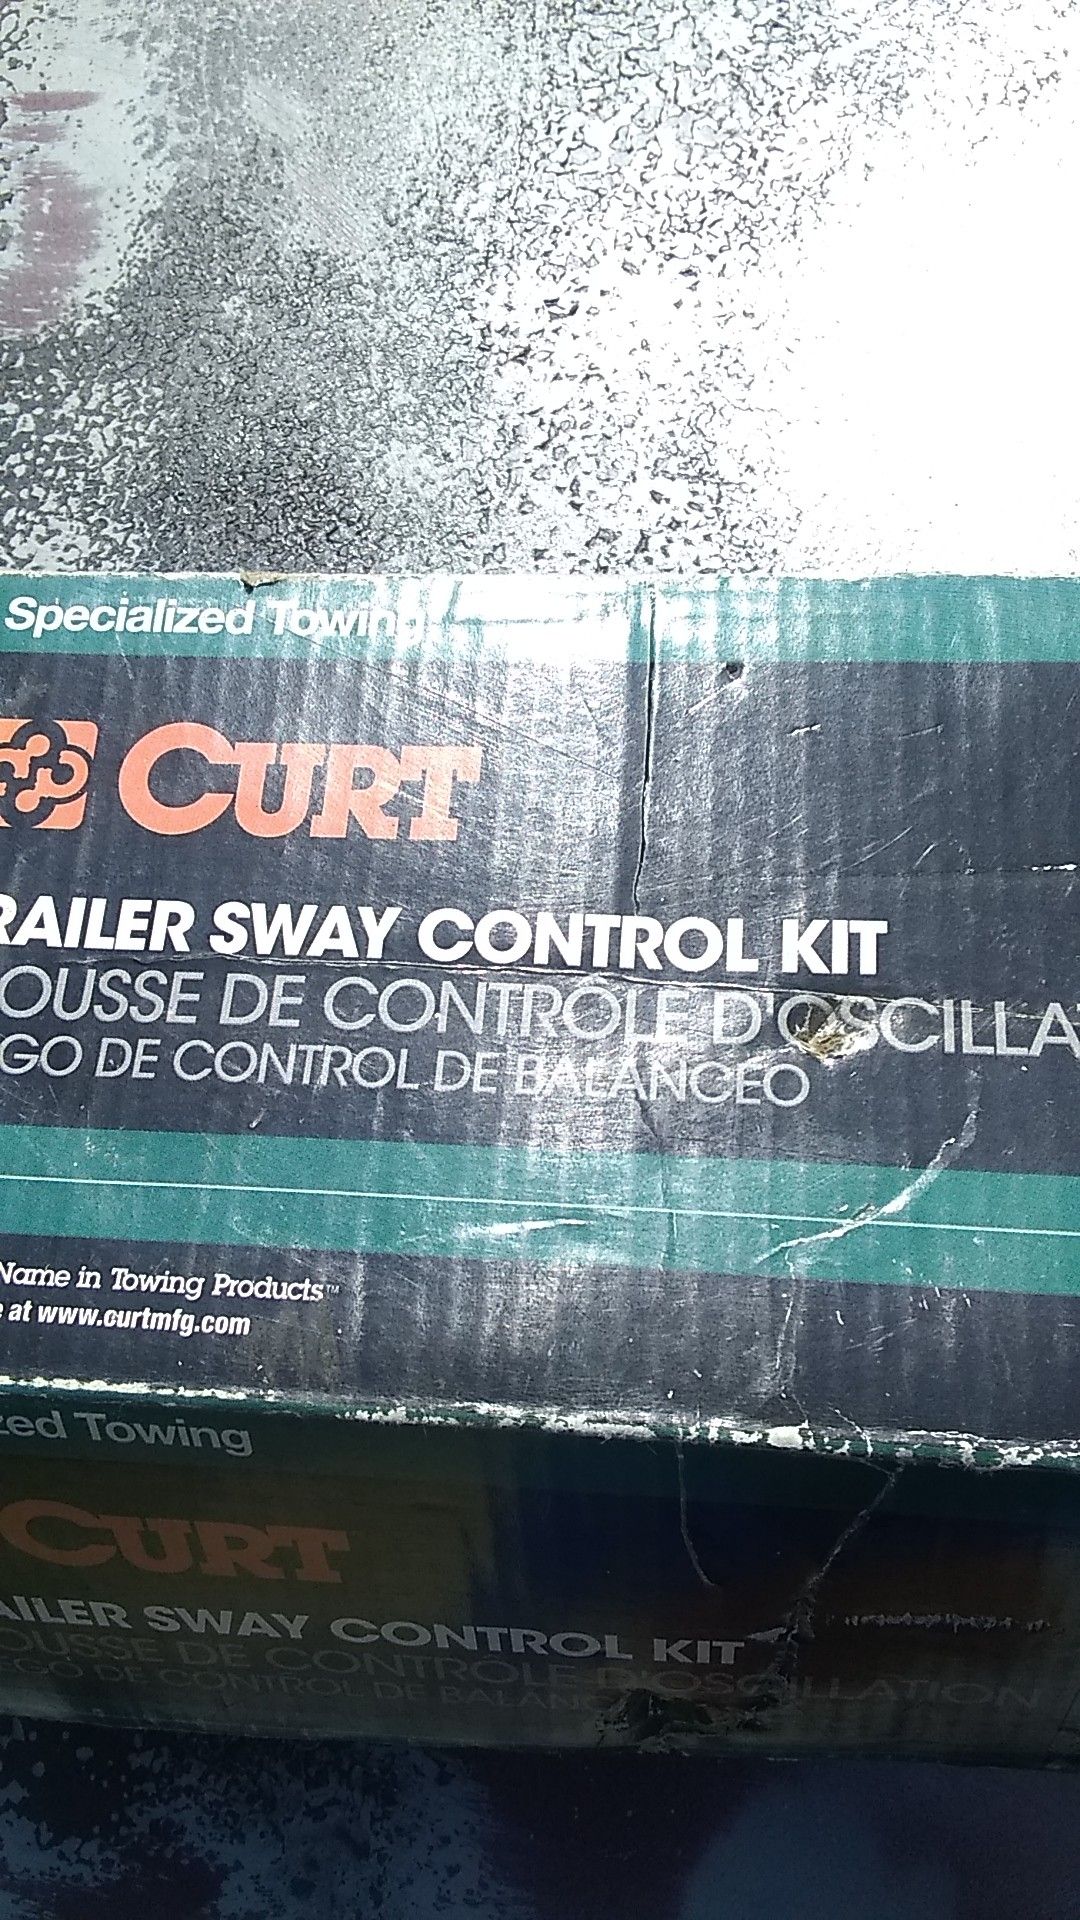 Trailer sway control kit